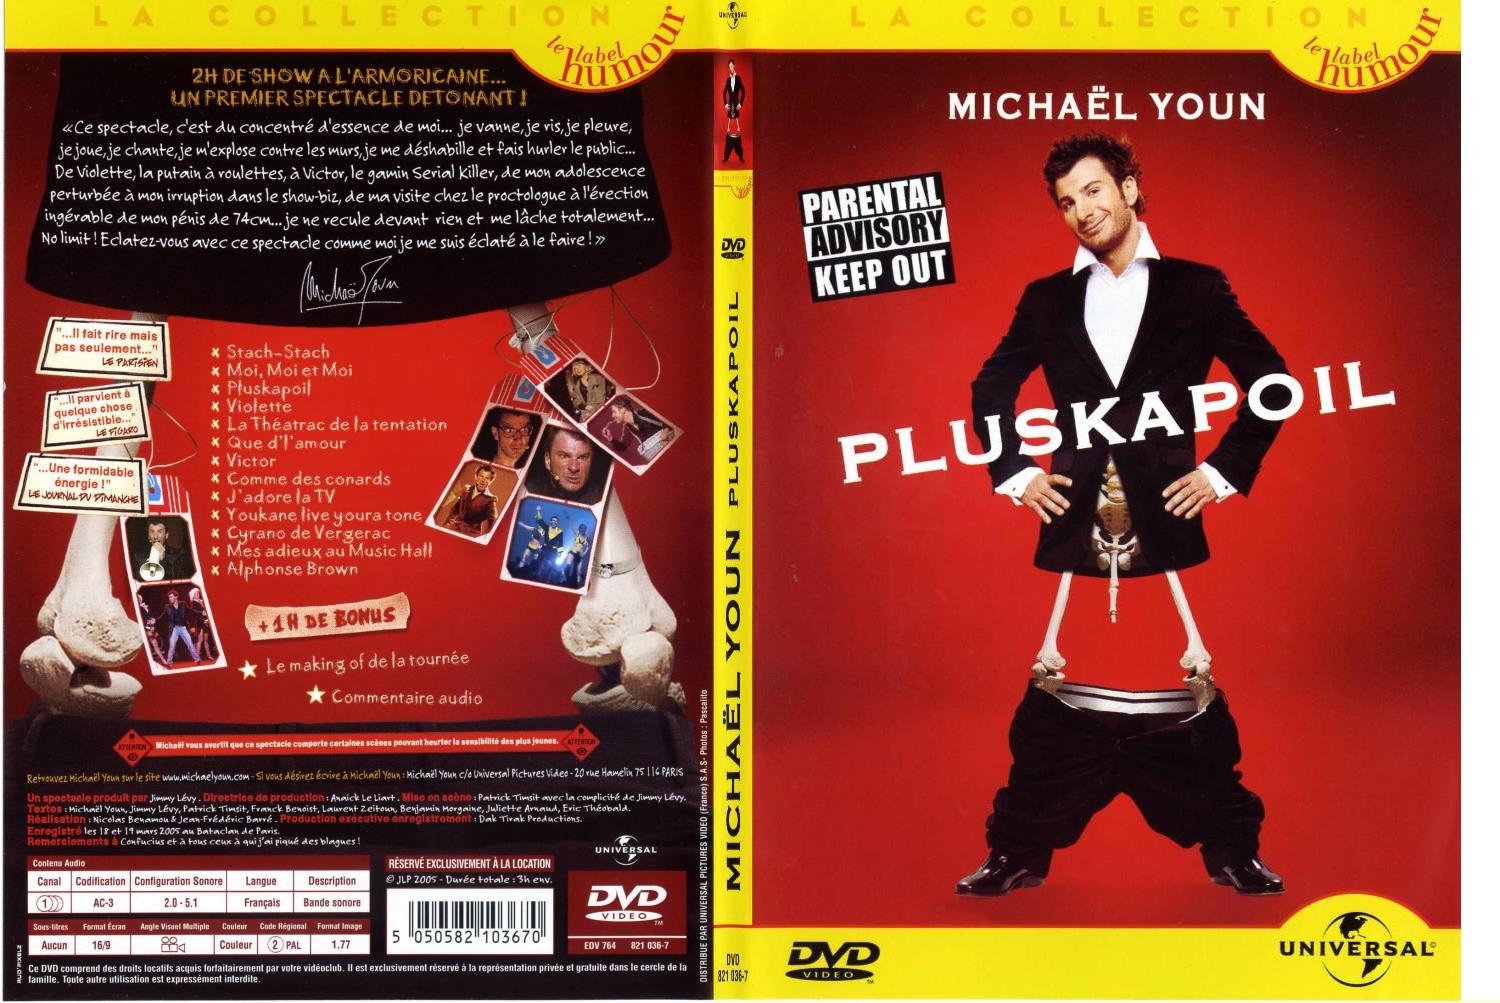 Jaquette DVD Michael Youn pluskapoil - SLIM